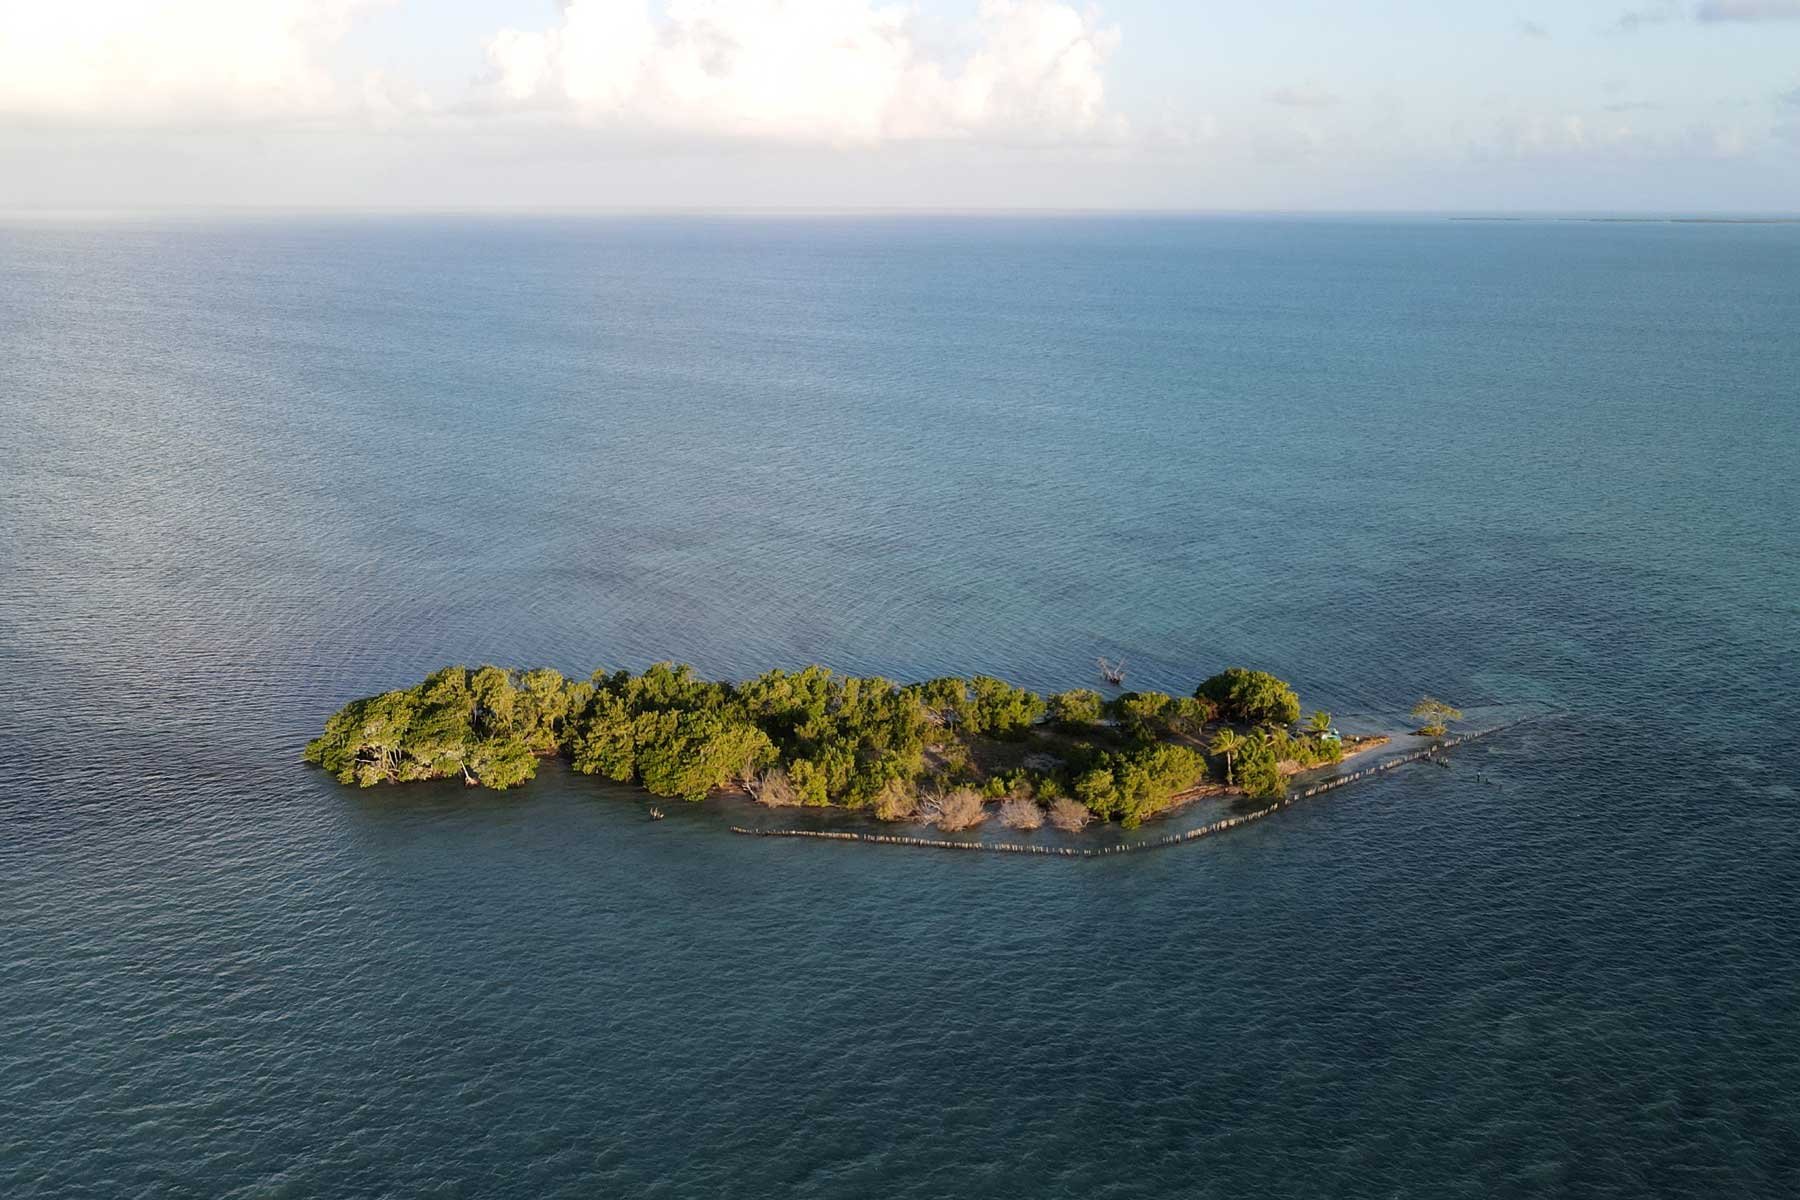 An island off the coast. Необитаемые острова Карибского моря. Остров Манитулин. Необитаемый остров в черном море. Безлюдные острова в Карибском море.